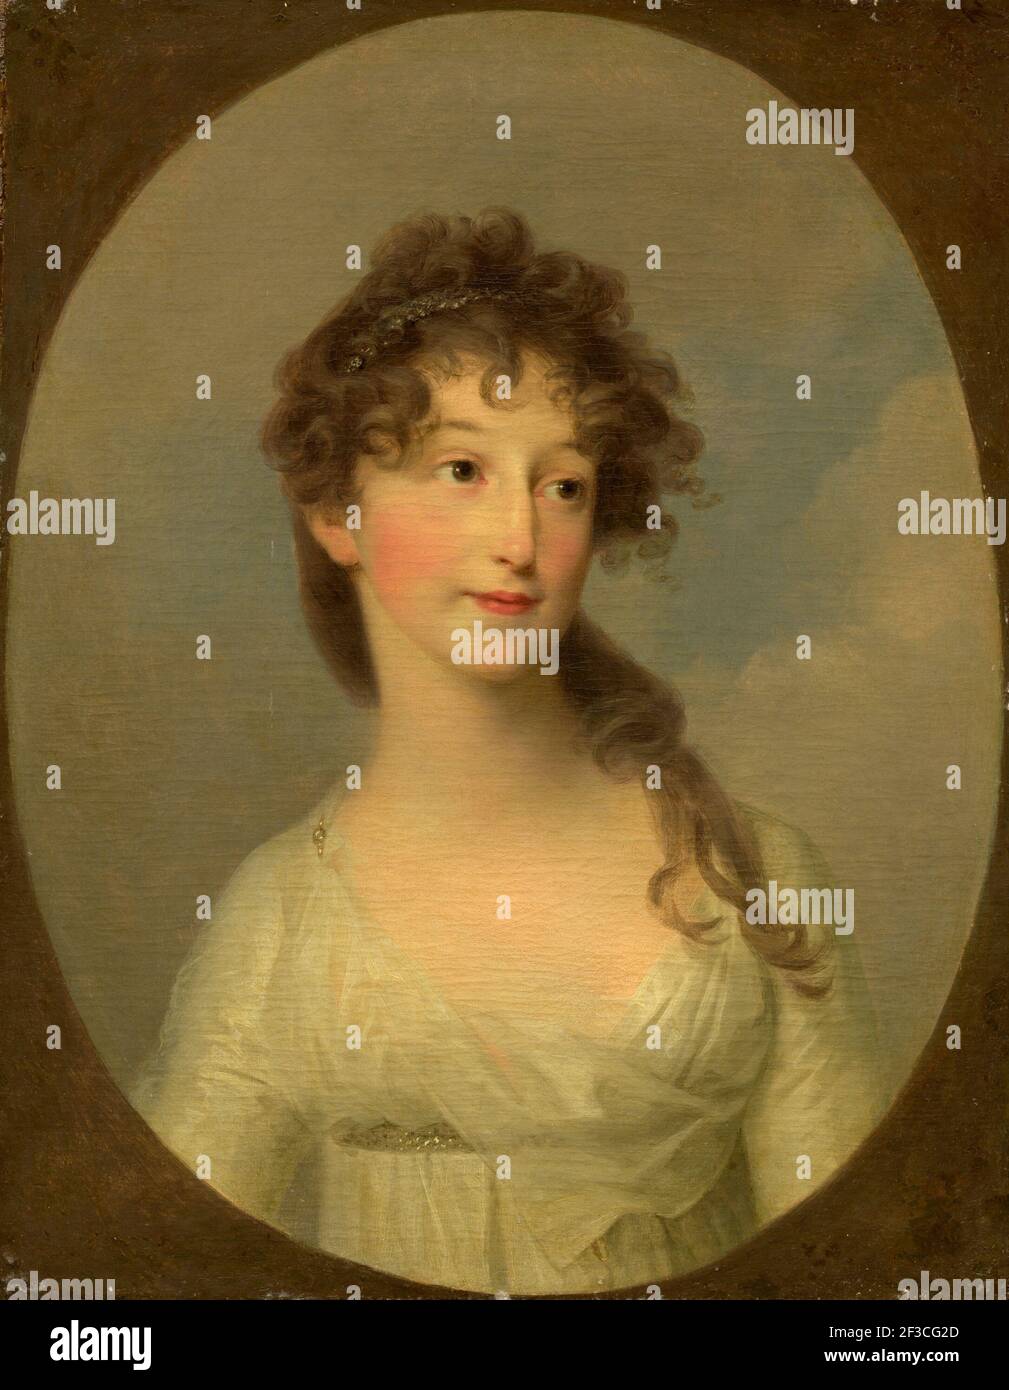 Possibly Franciska Krasinska, Duchess of Courland, c. 1790. Stock Photo